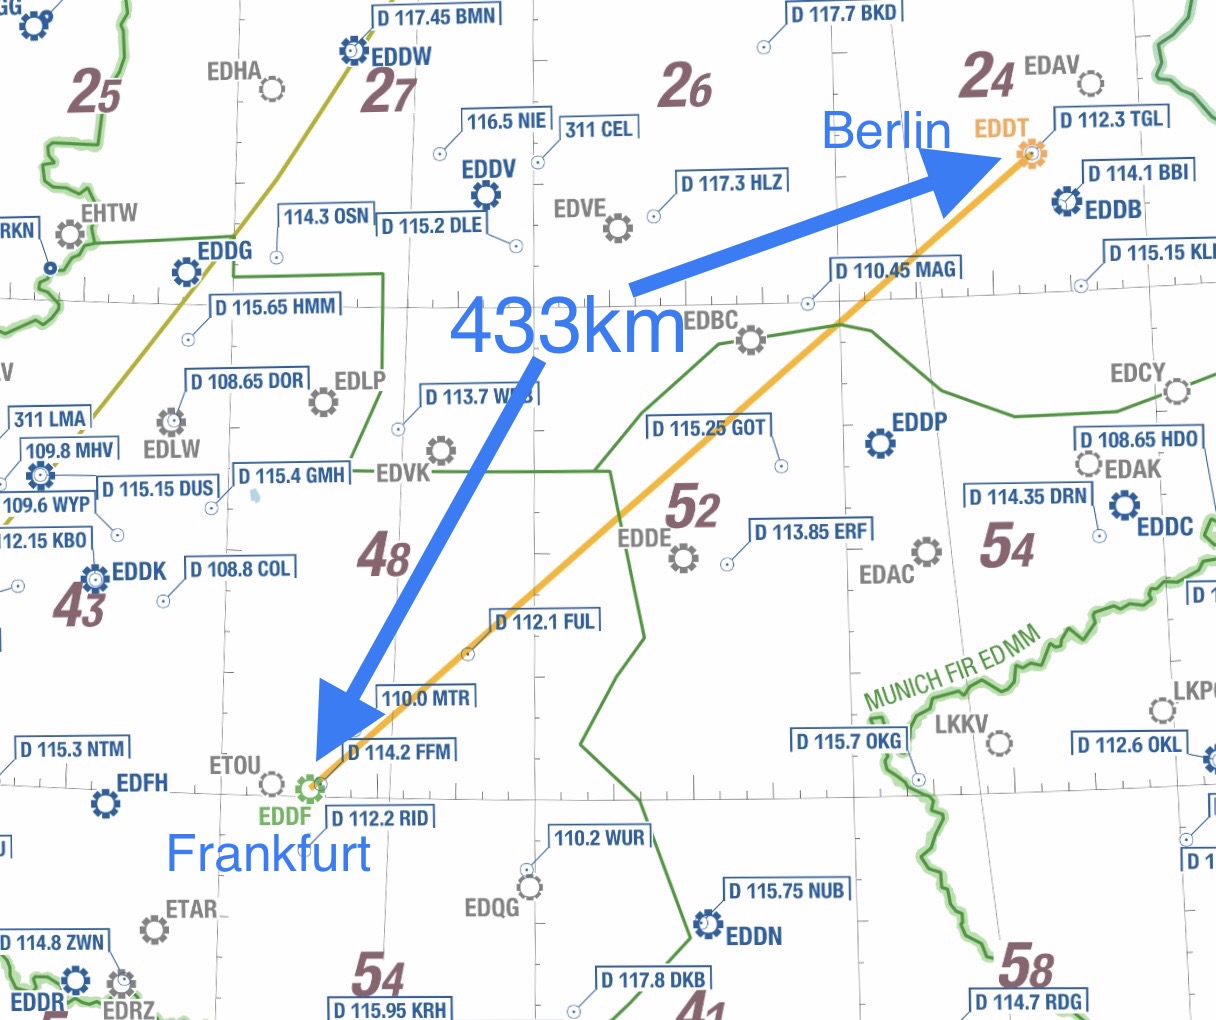 Frankfurt-Berlin direct routing is 433km 